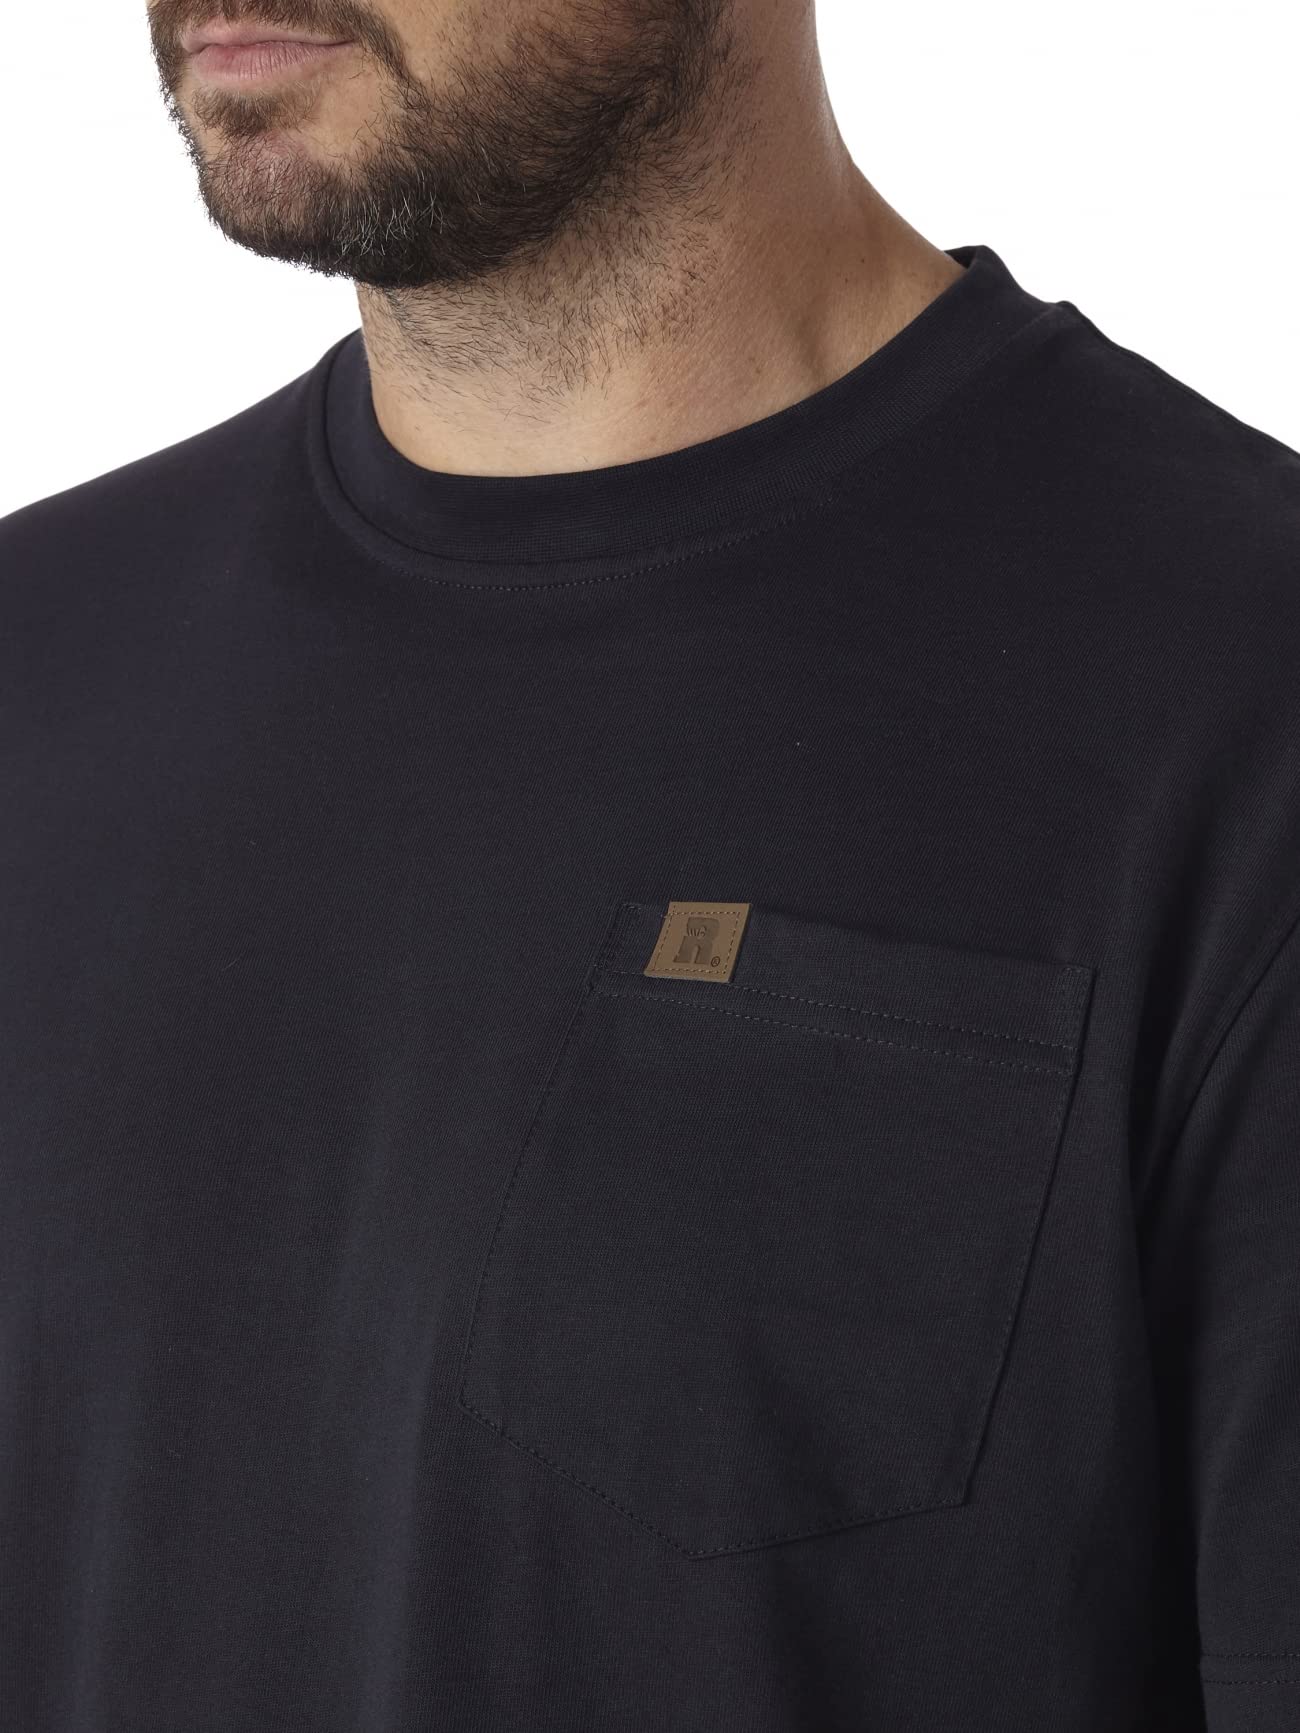 Wrangler Riggs Workwear Men's Short Sleeve Pocket T-Shirt